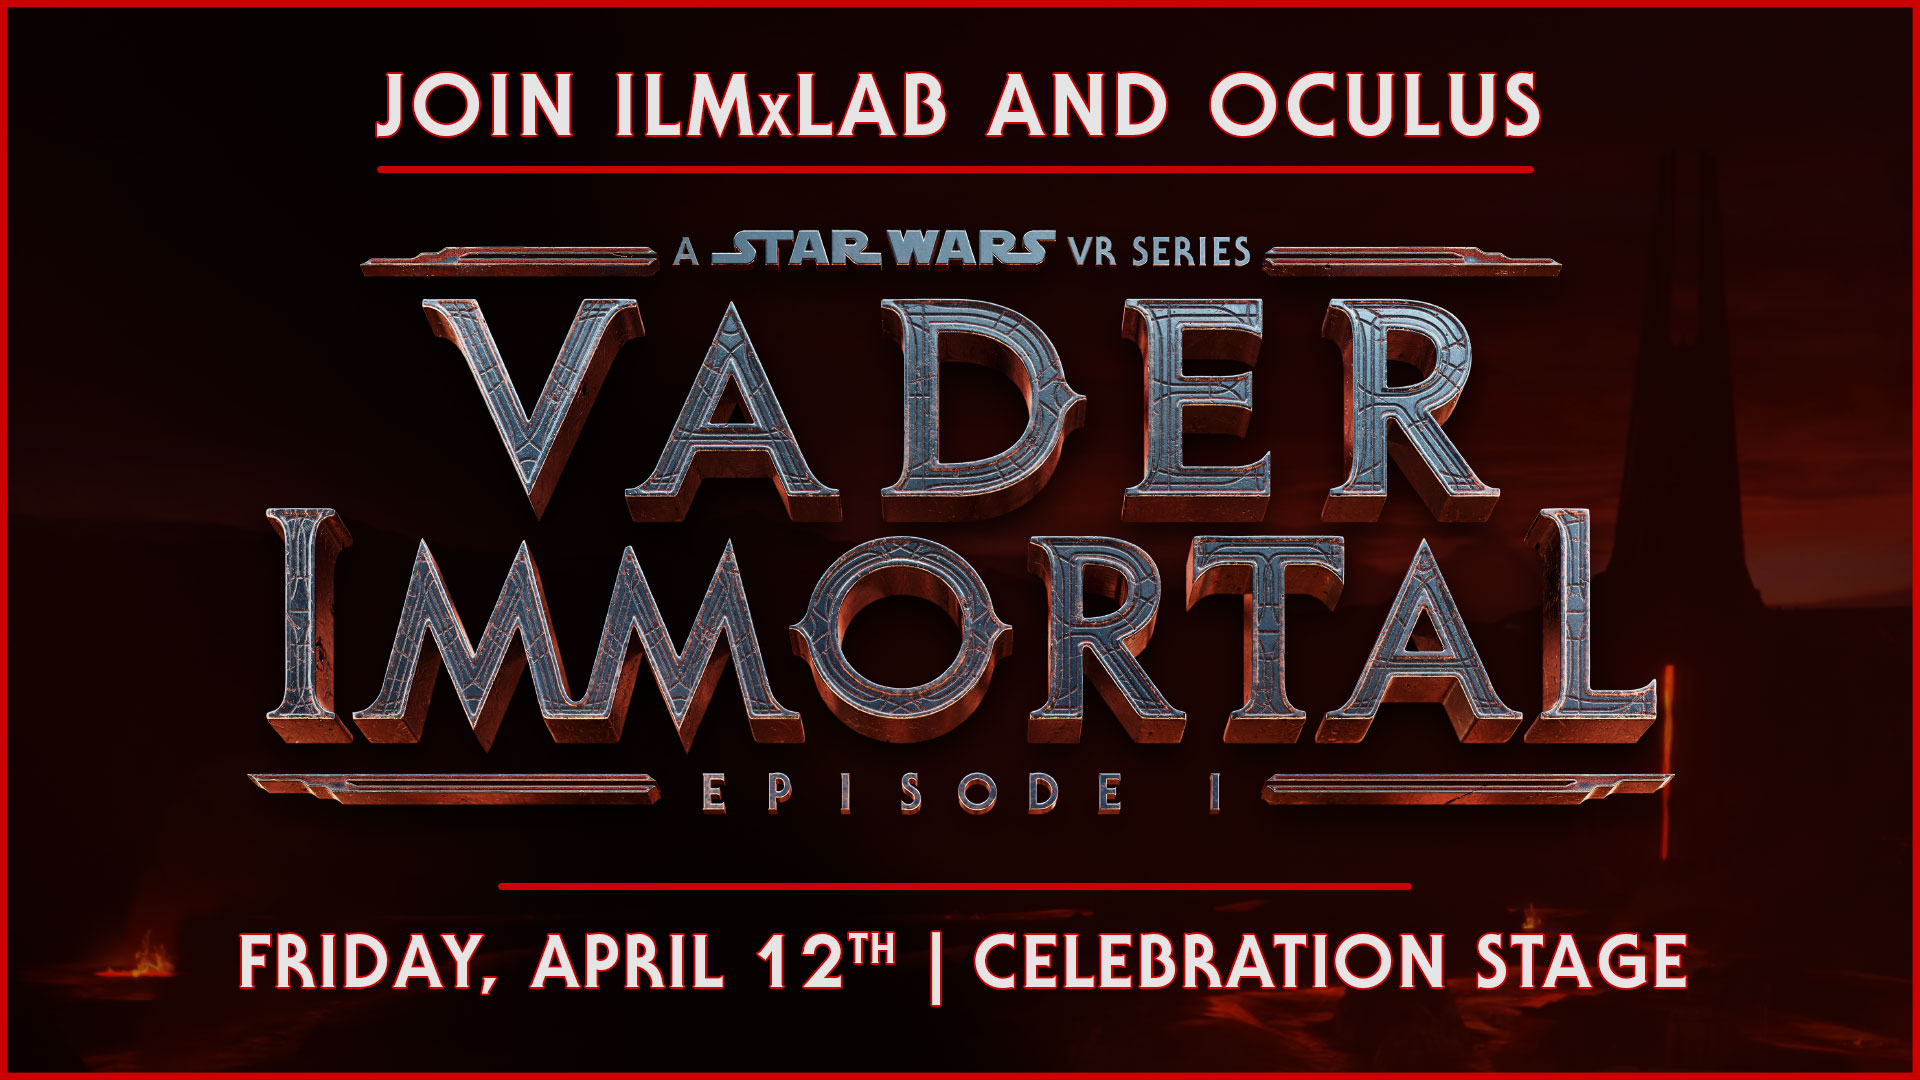 https://www.ilmxlab.com/app/uploads/2019/04/Vader_Immortal_SWCC_Announce.jpg